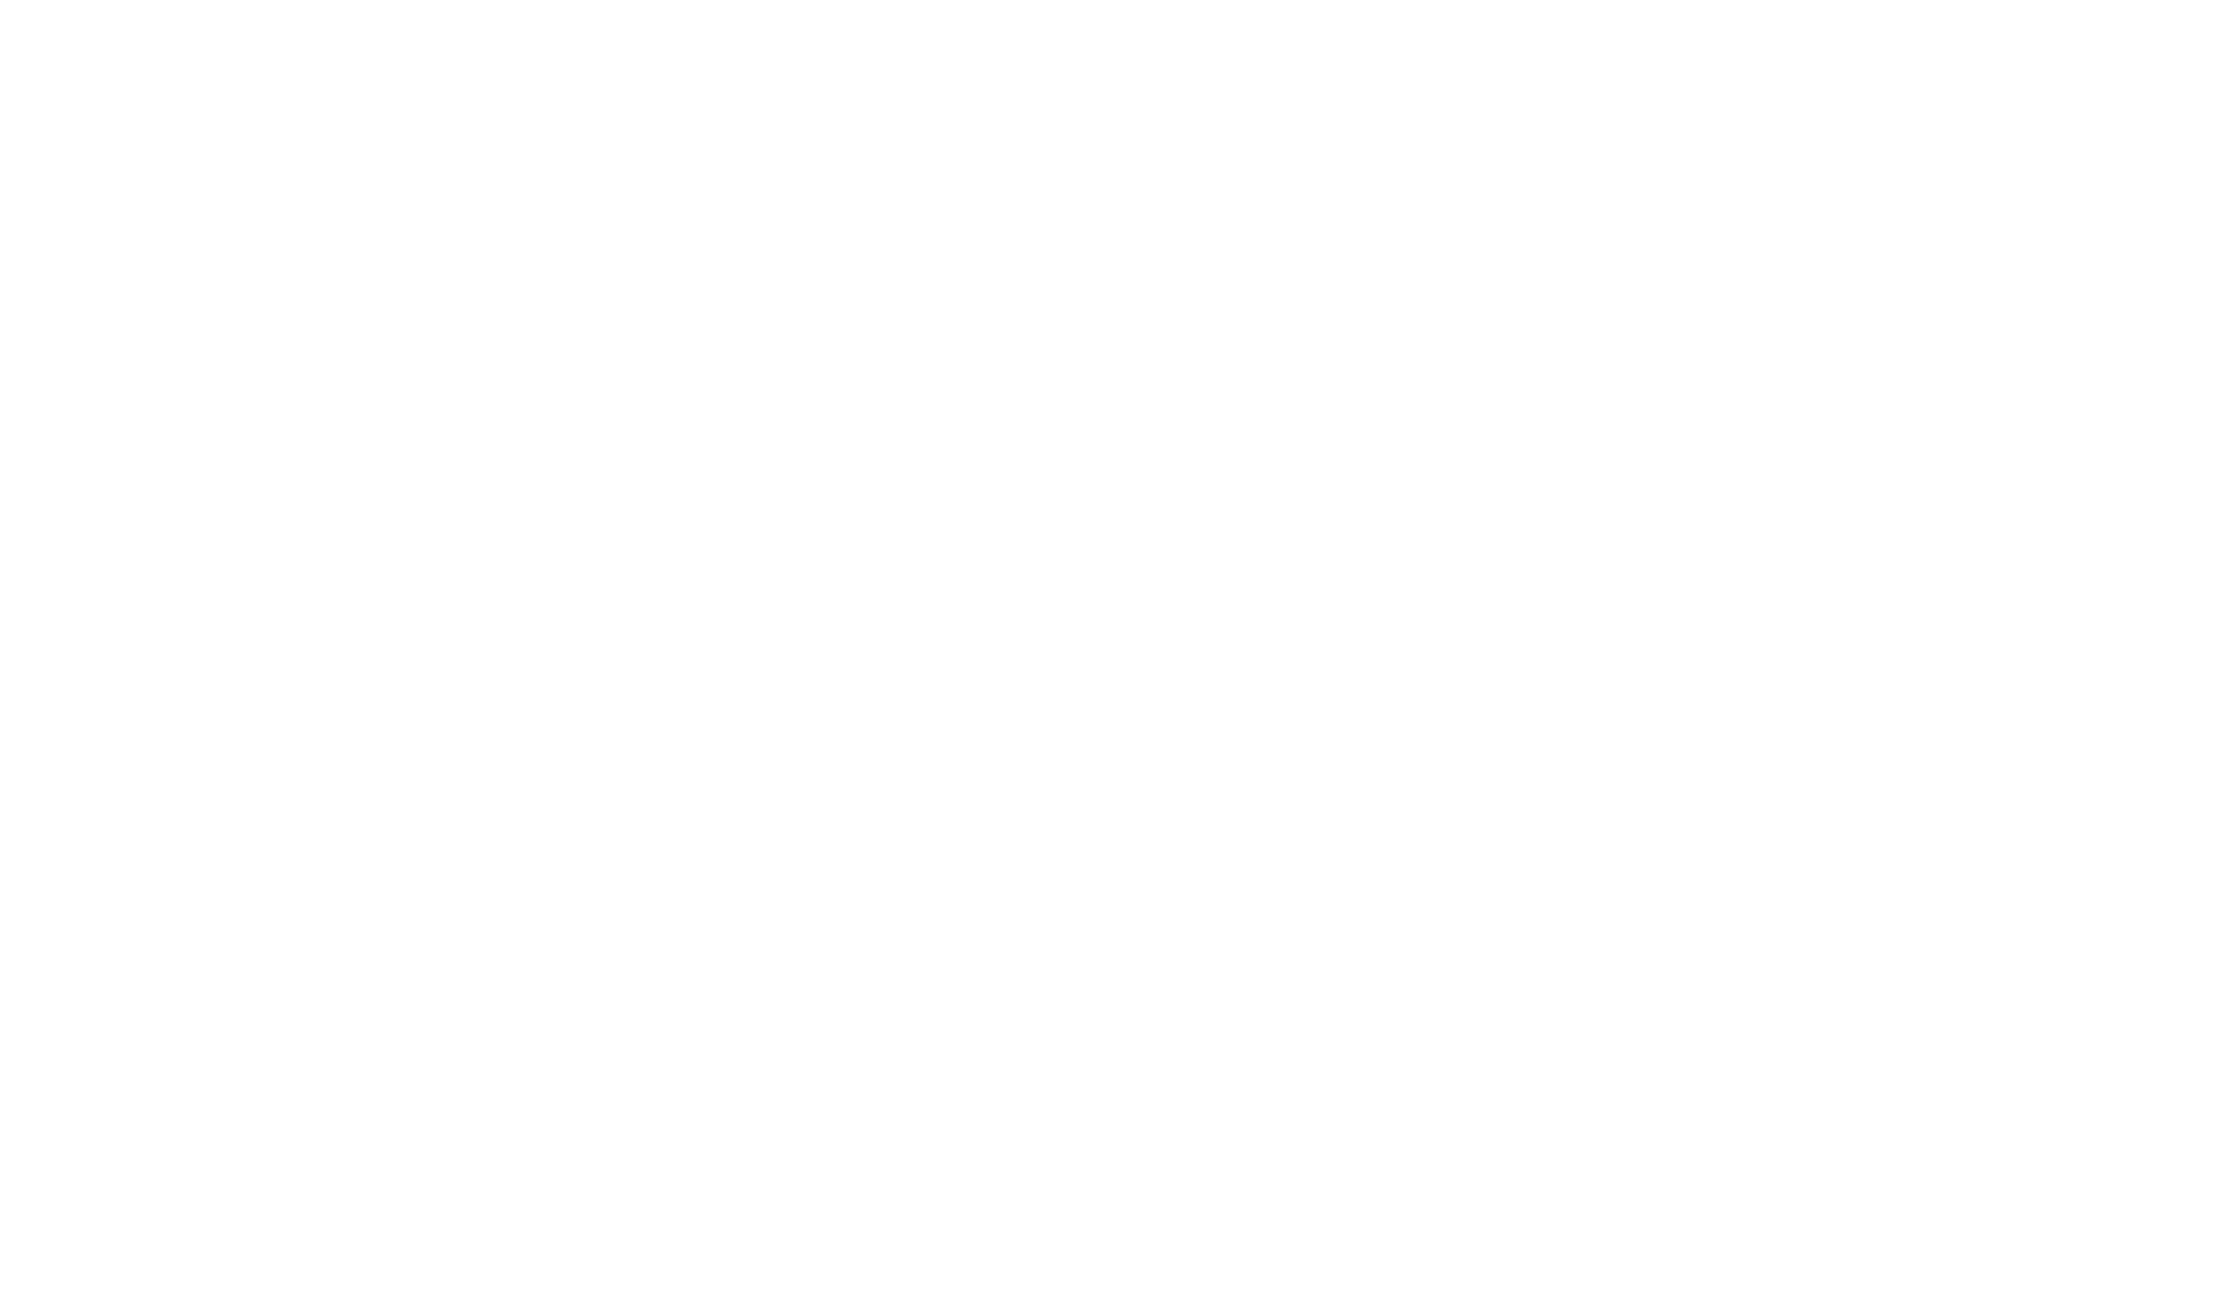 Jugendbeirat Seligenstadt